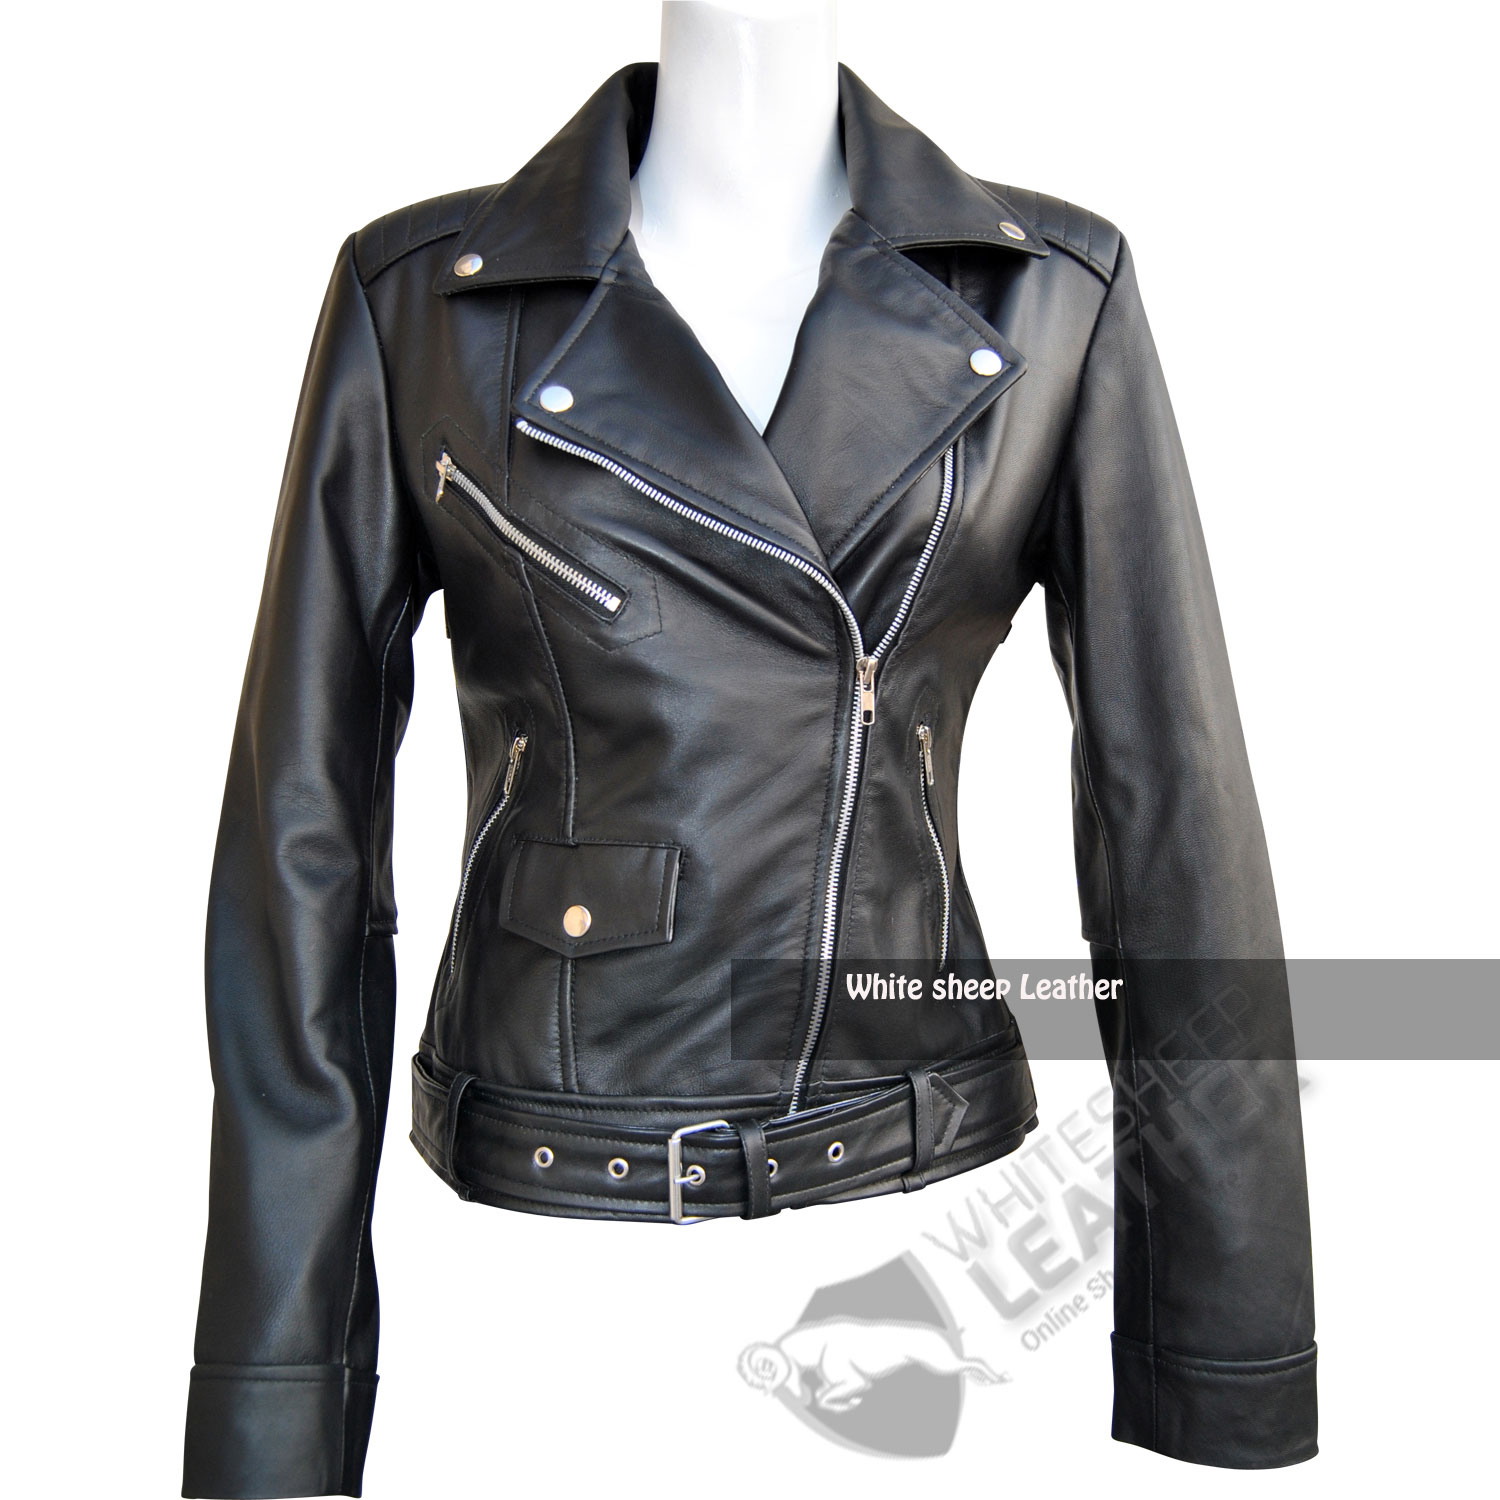 Classic Brando Ladies Purple Biker Style Motorcycle Cruiser Hide Leather Jacket